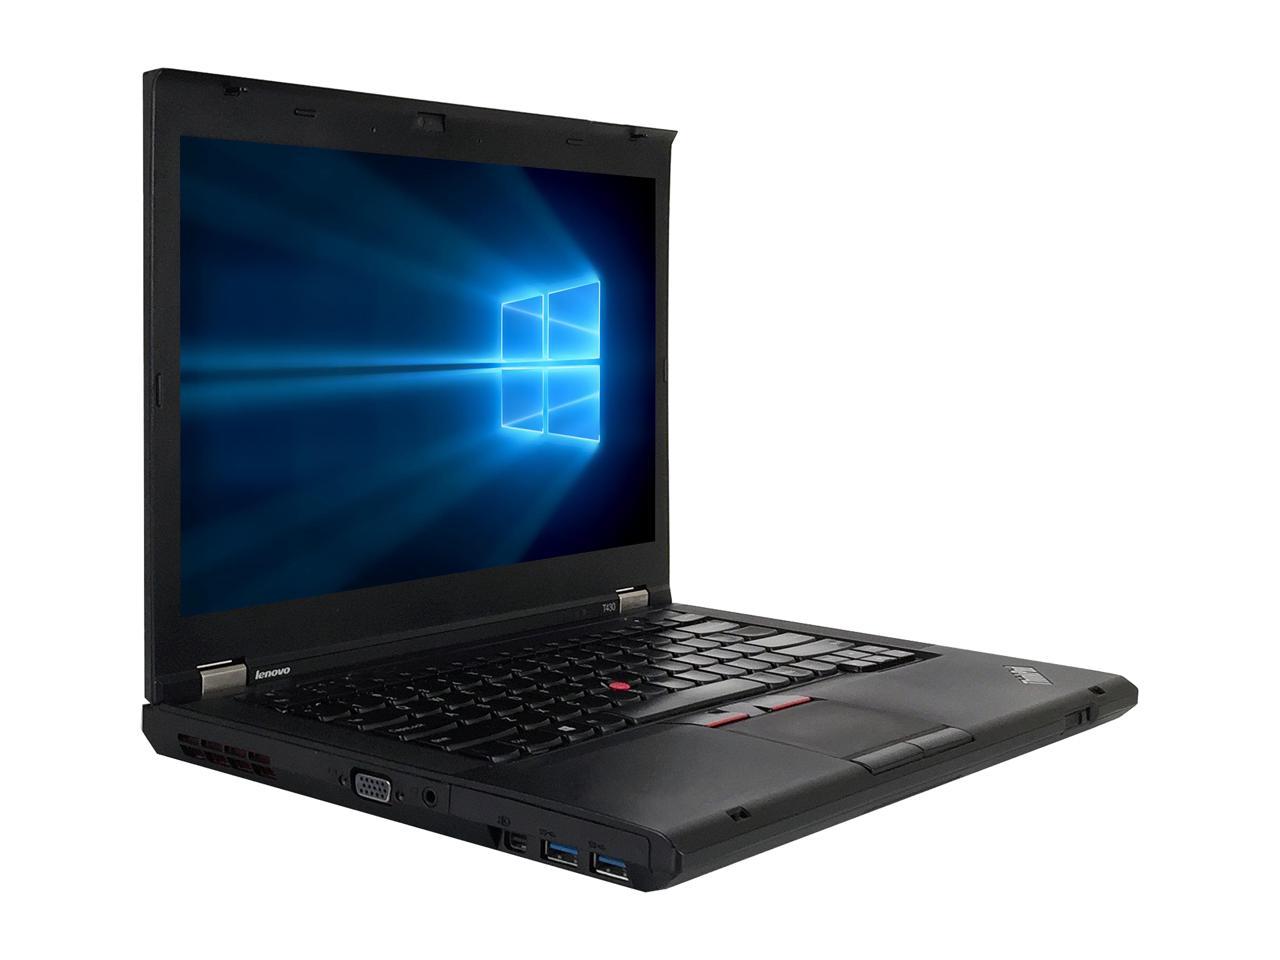 Refurbished Lenovo ThinkPad T430 14.0" Intel Core i5-3320M 2.6GHz 8GB DDR3 120GB SSD DVD Windows 10 Professional 64 Bits 1 Year Warranty